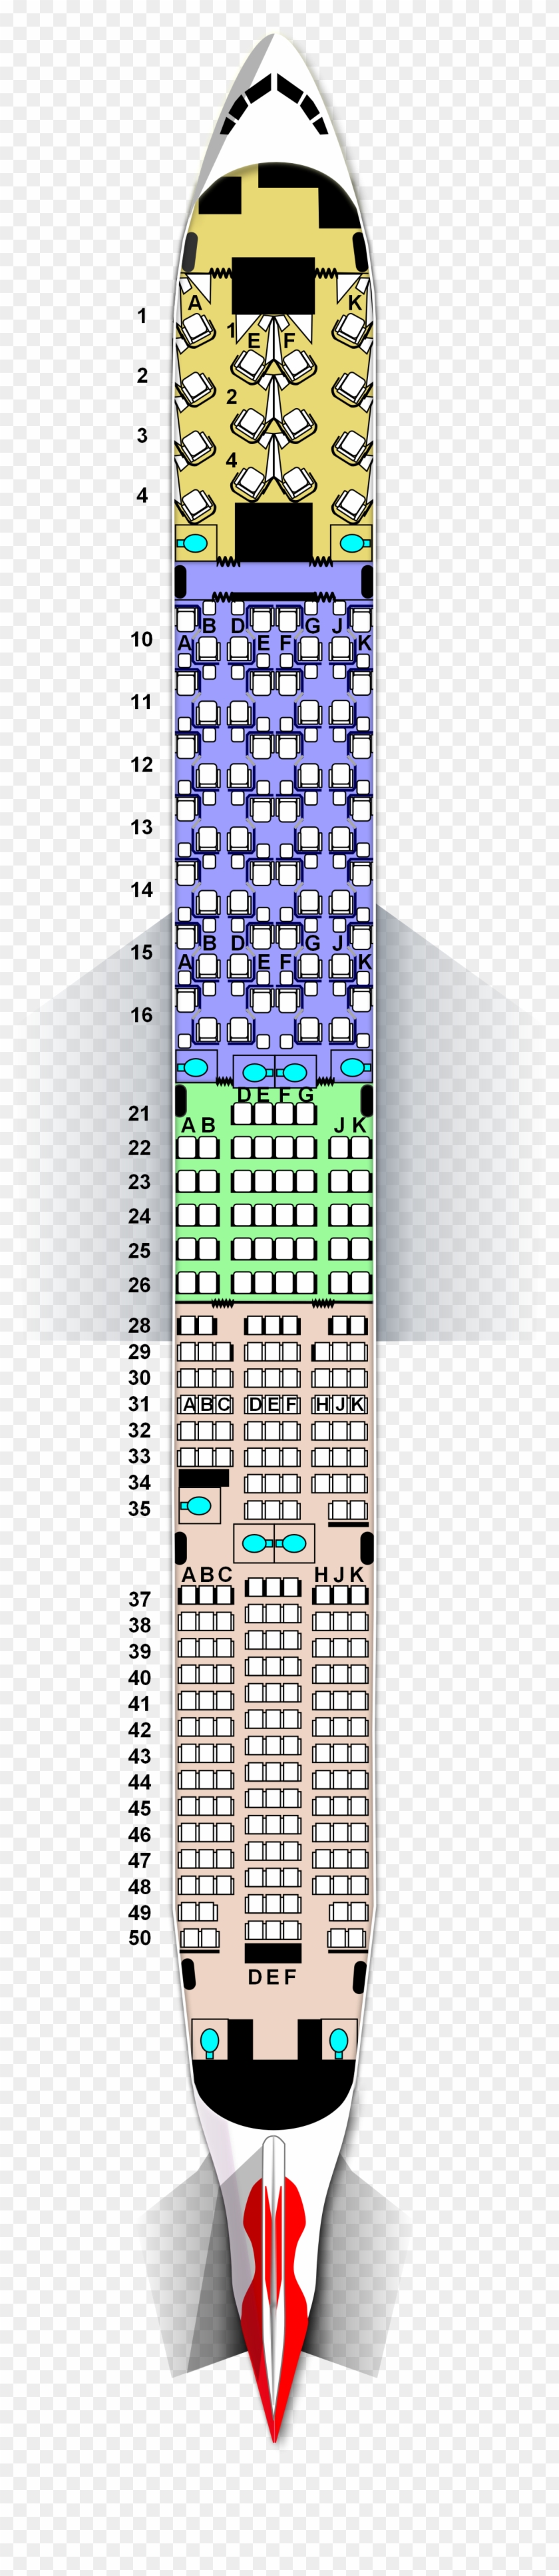 Boeing 777 Seat Layout